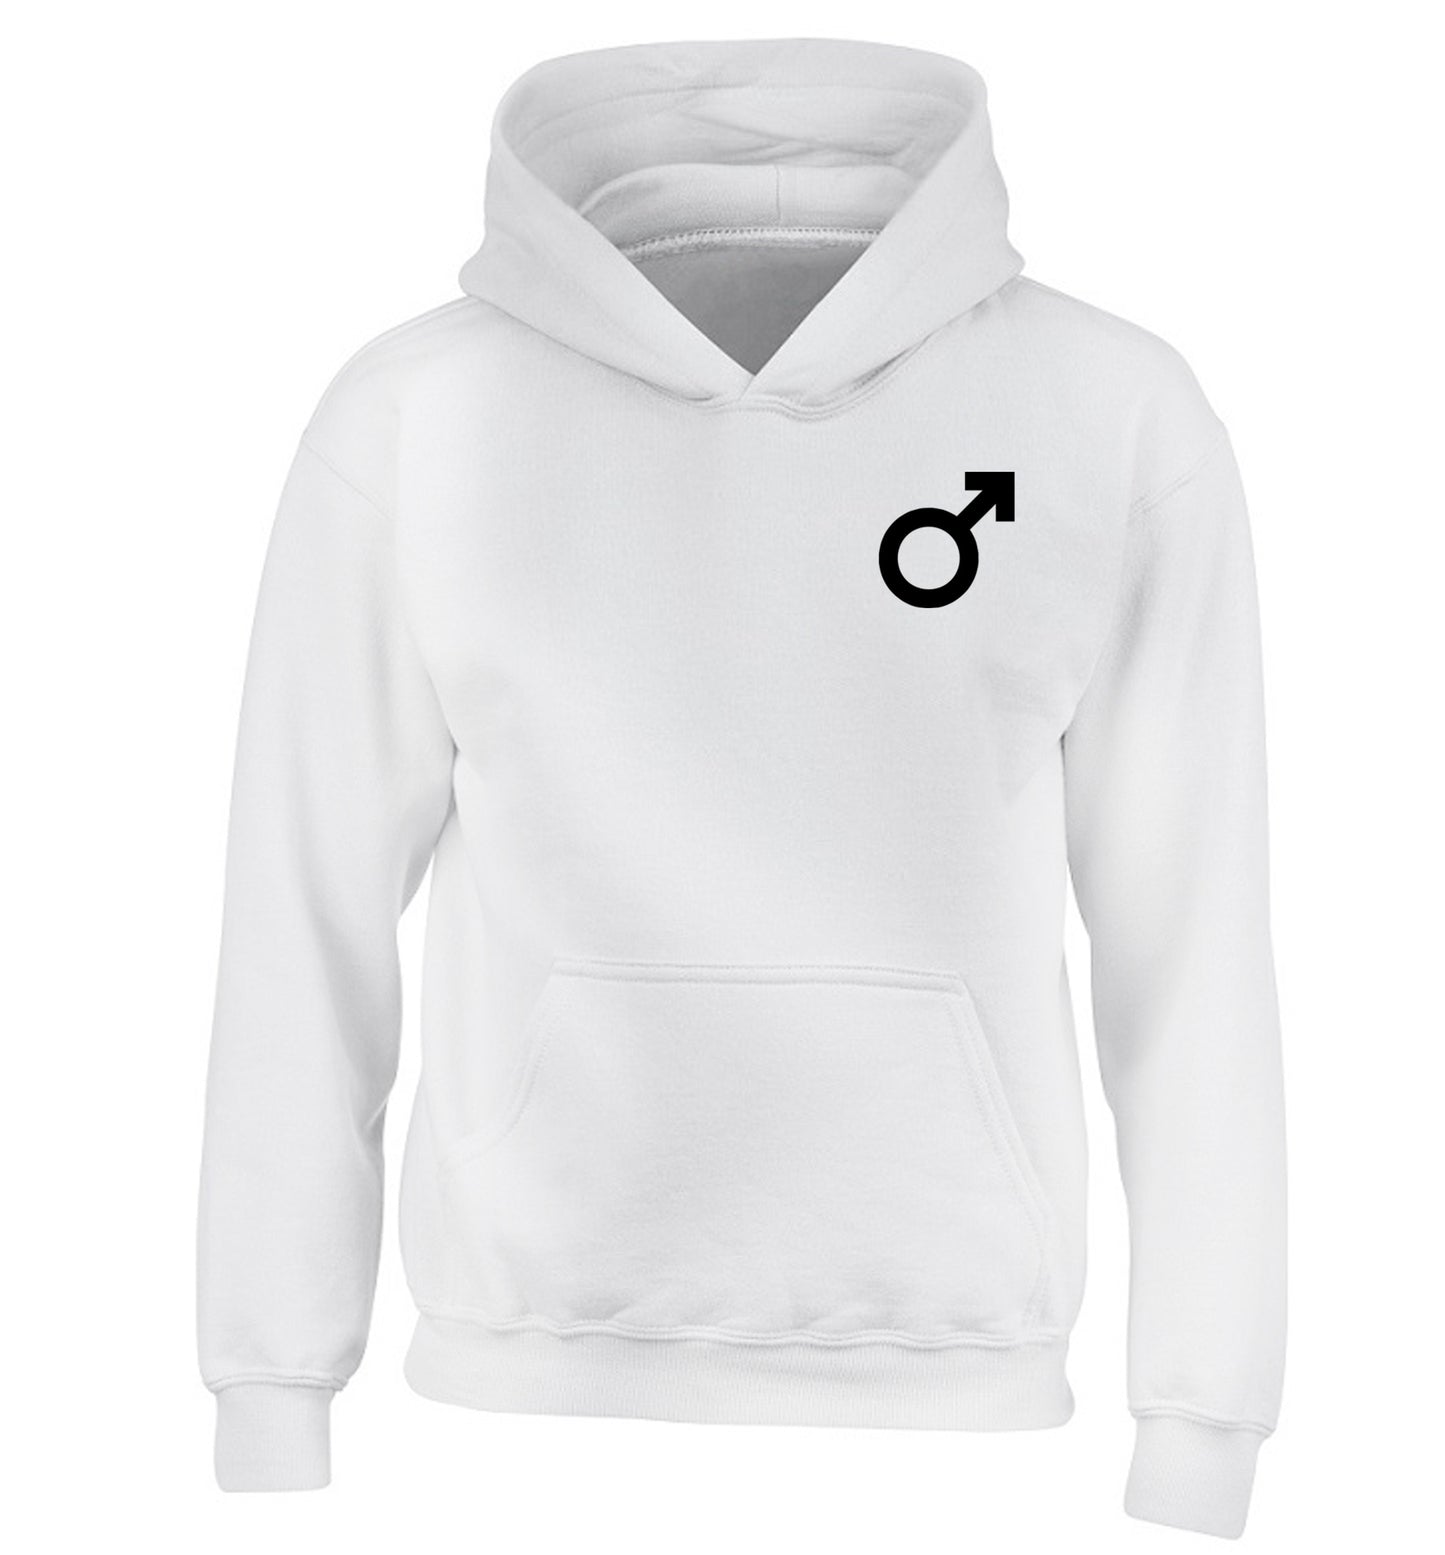 Male symbol pocket children's white hoodie 12-14 Years